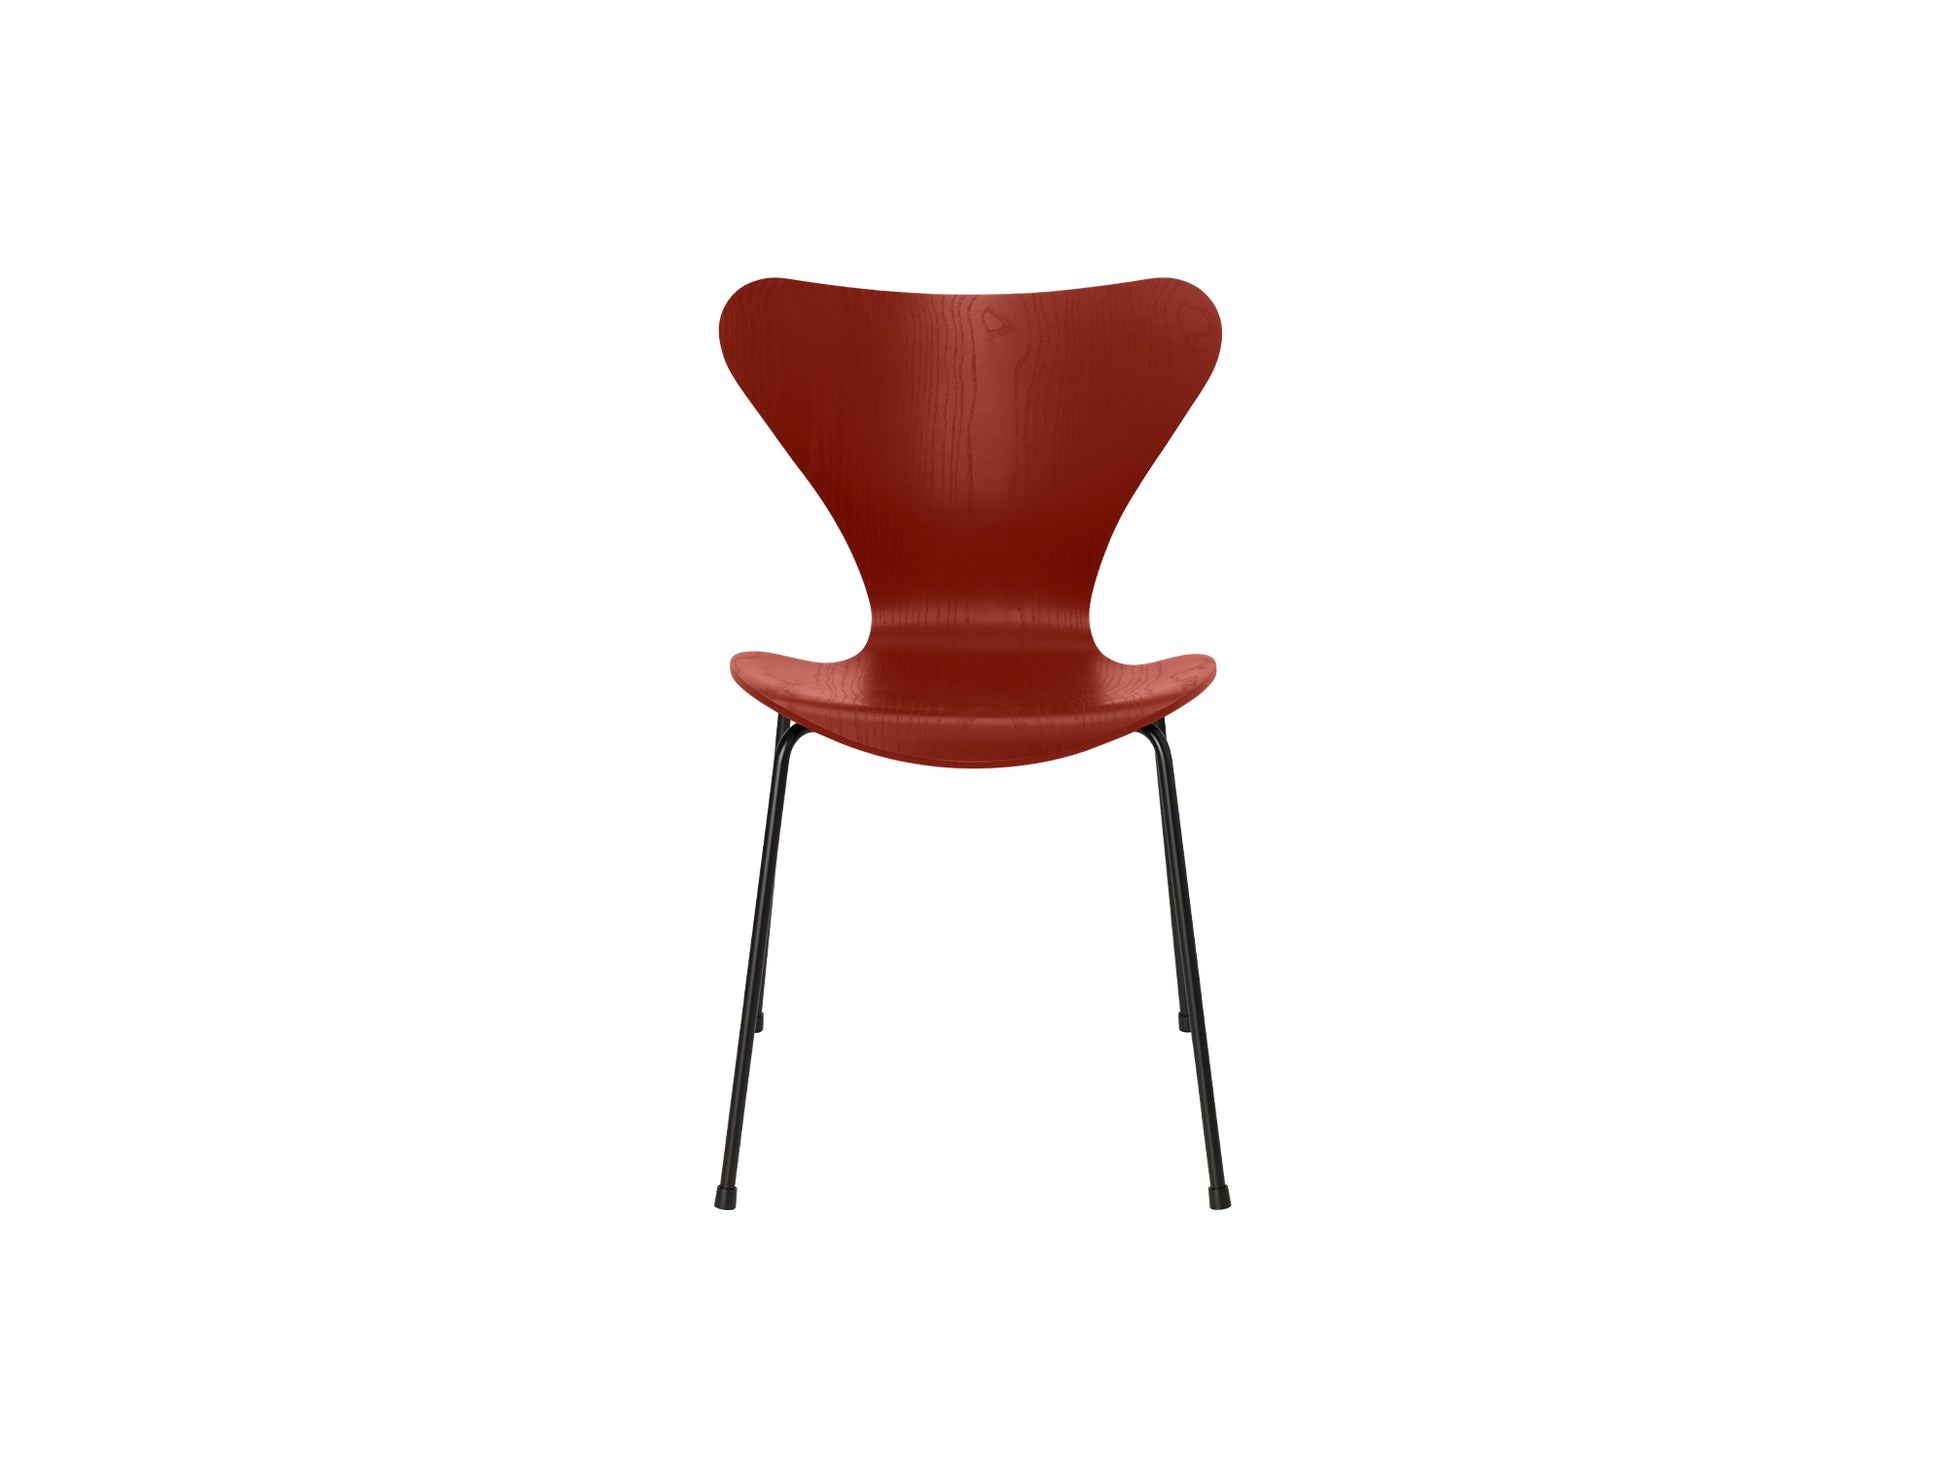 Series 7™ 3107 Dining Chair by Fritz Hansen - Venetian Red Coloured Ash Veneer Shell / Black Steel